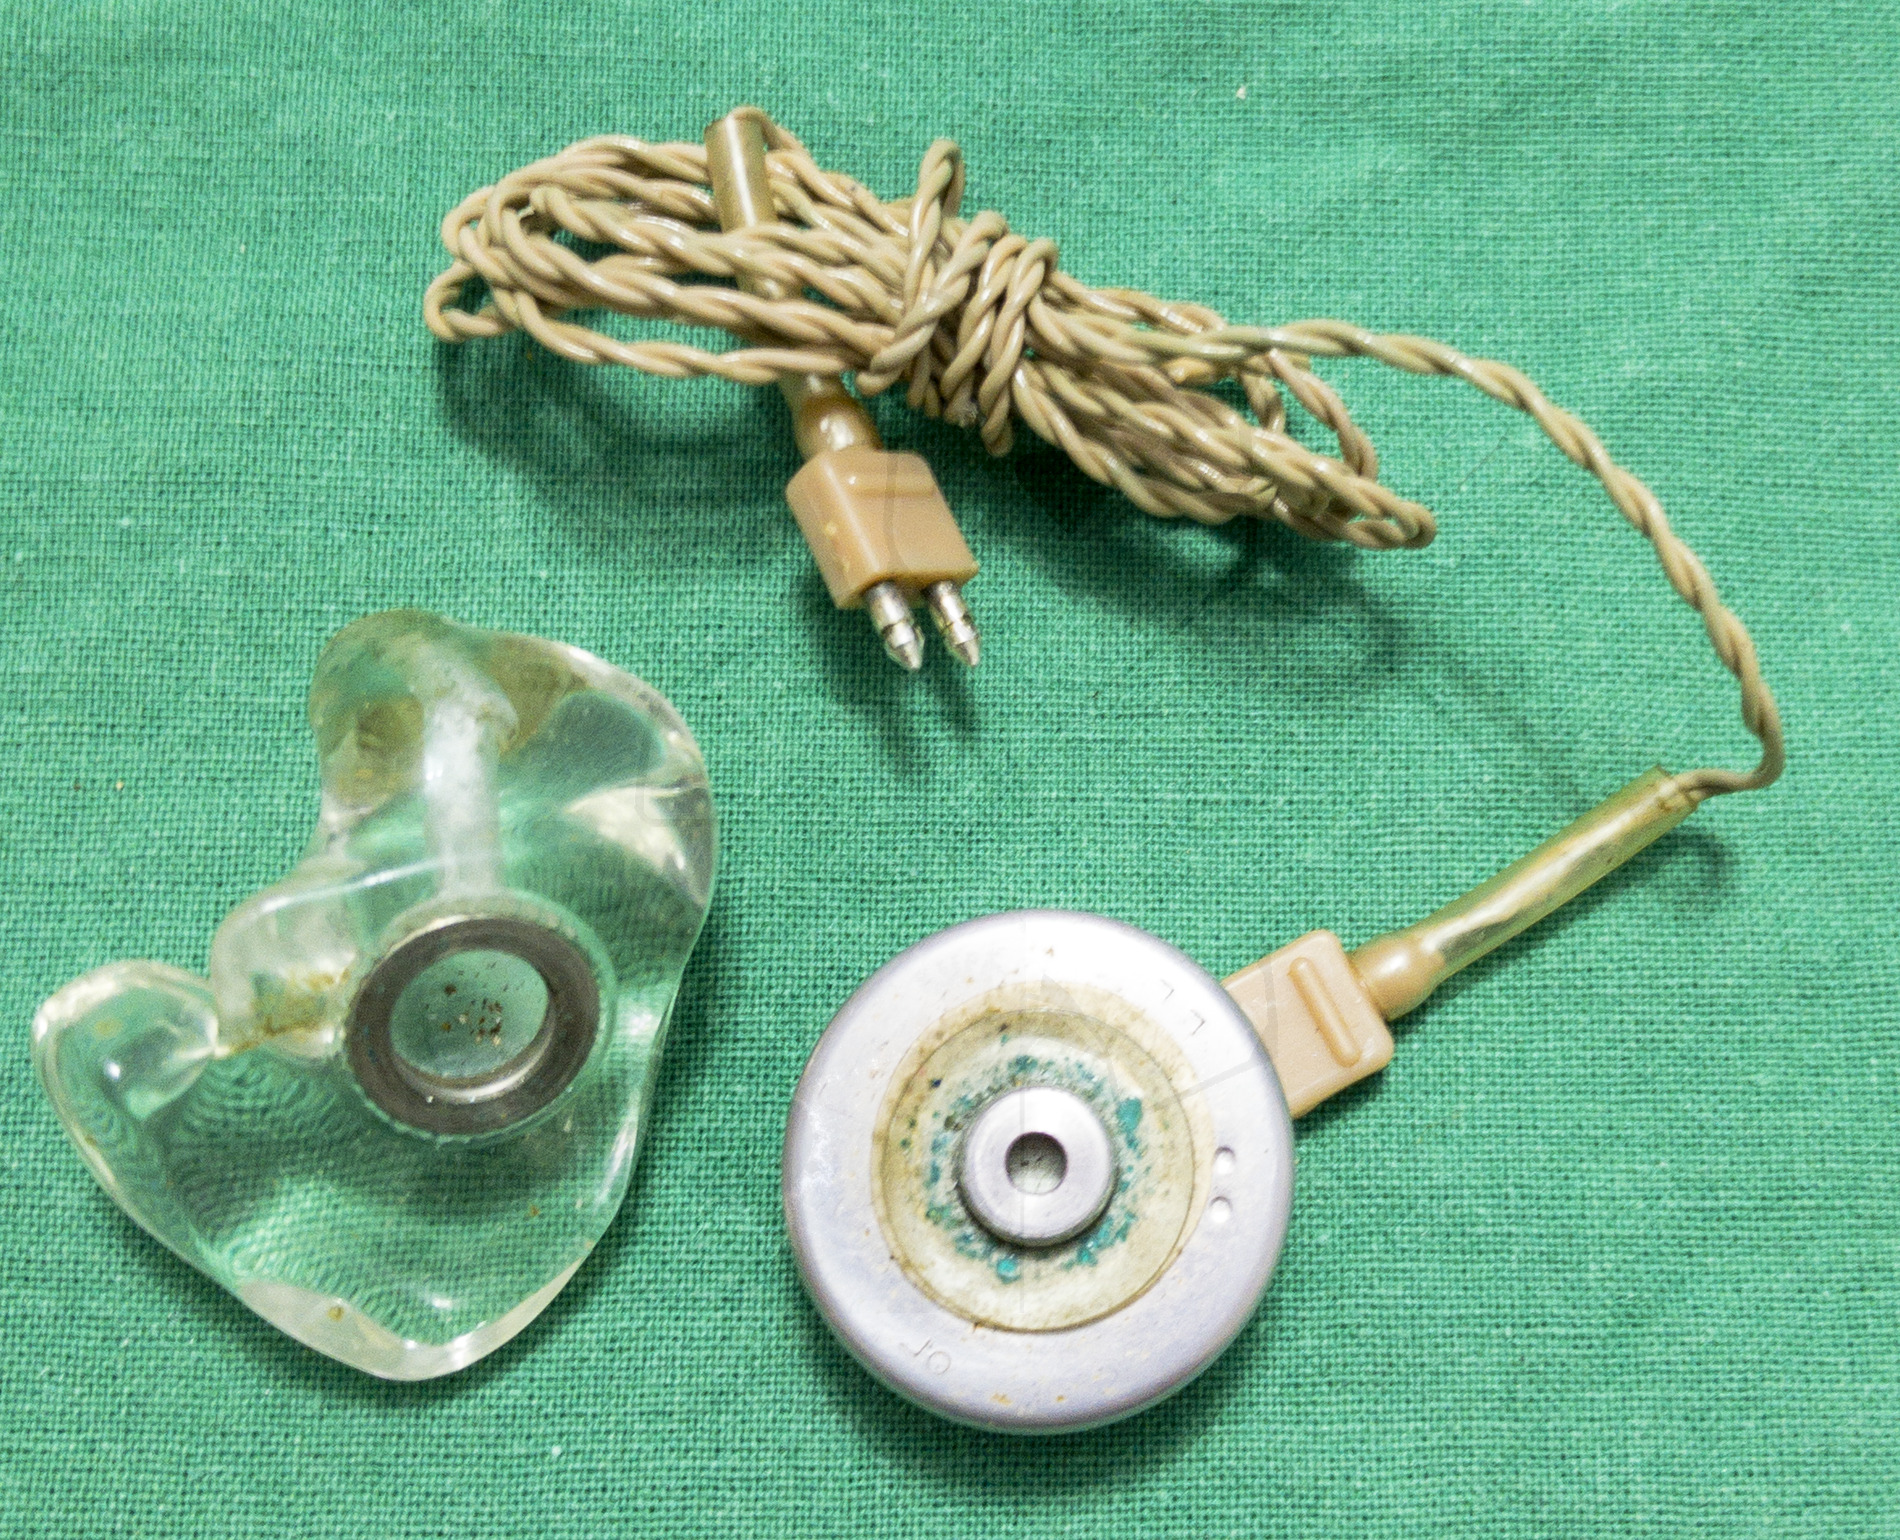 Hörgerät "Fortiphone Type 20", ca. 1949, Ohrhörer ohne Aufgeschraubten Aufsatz